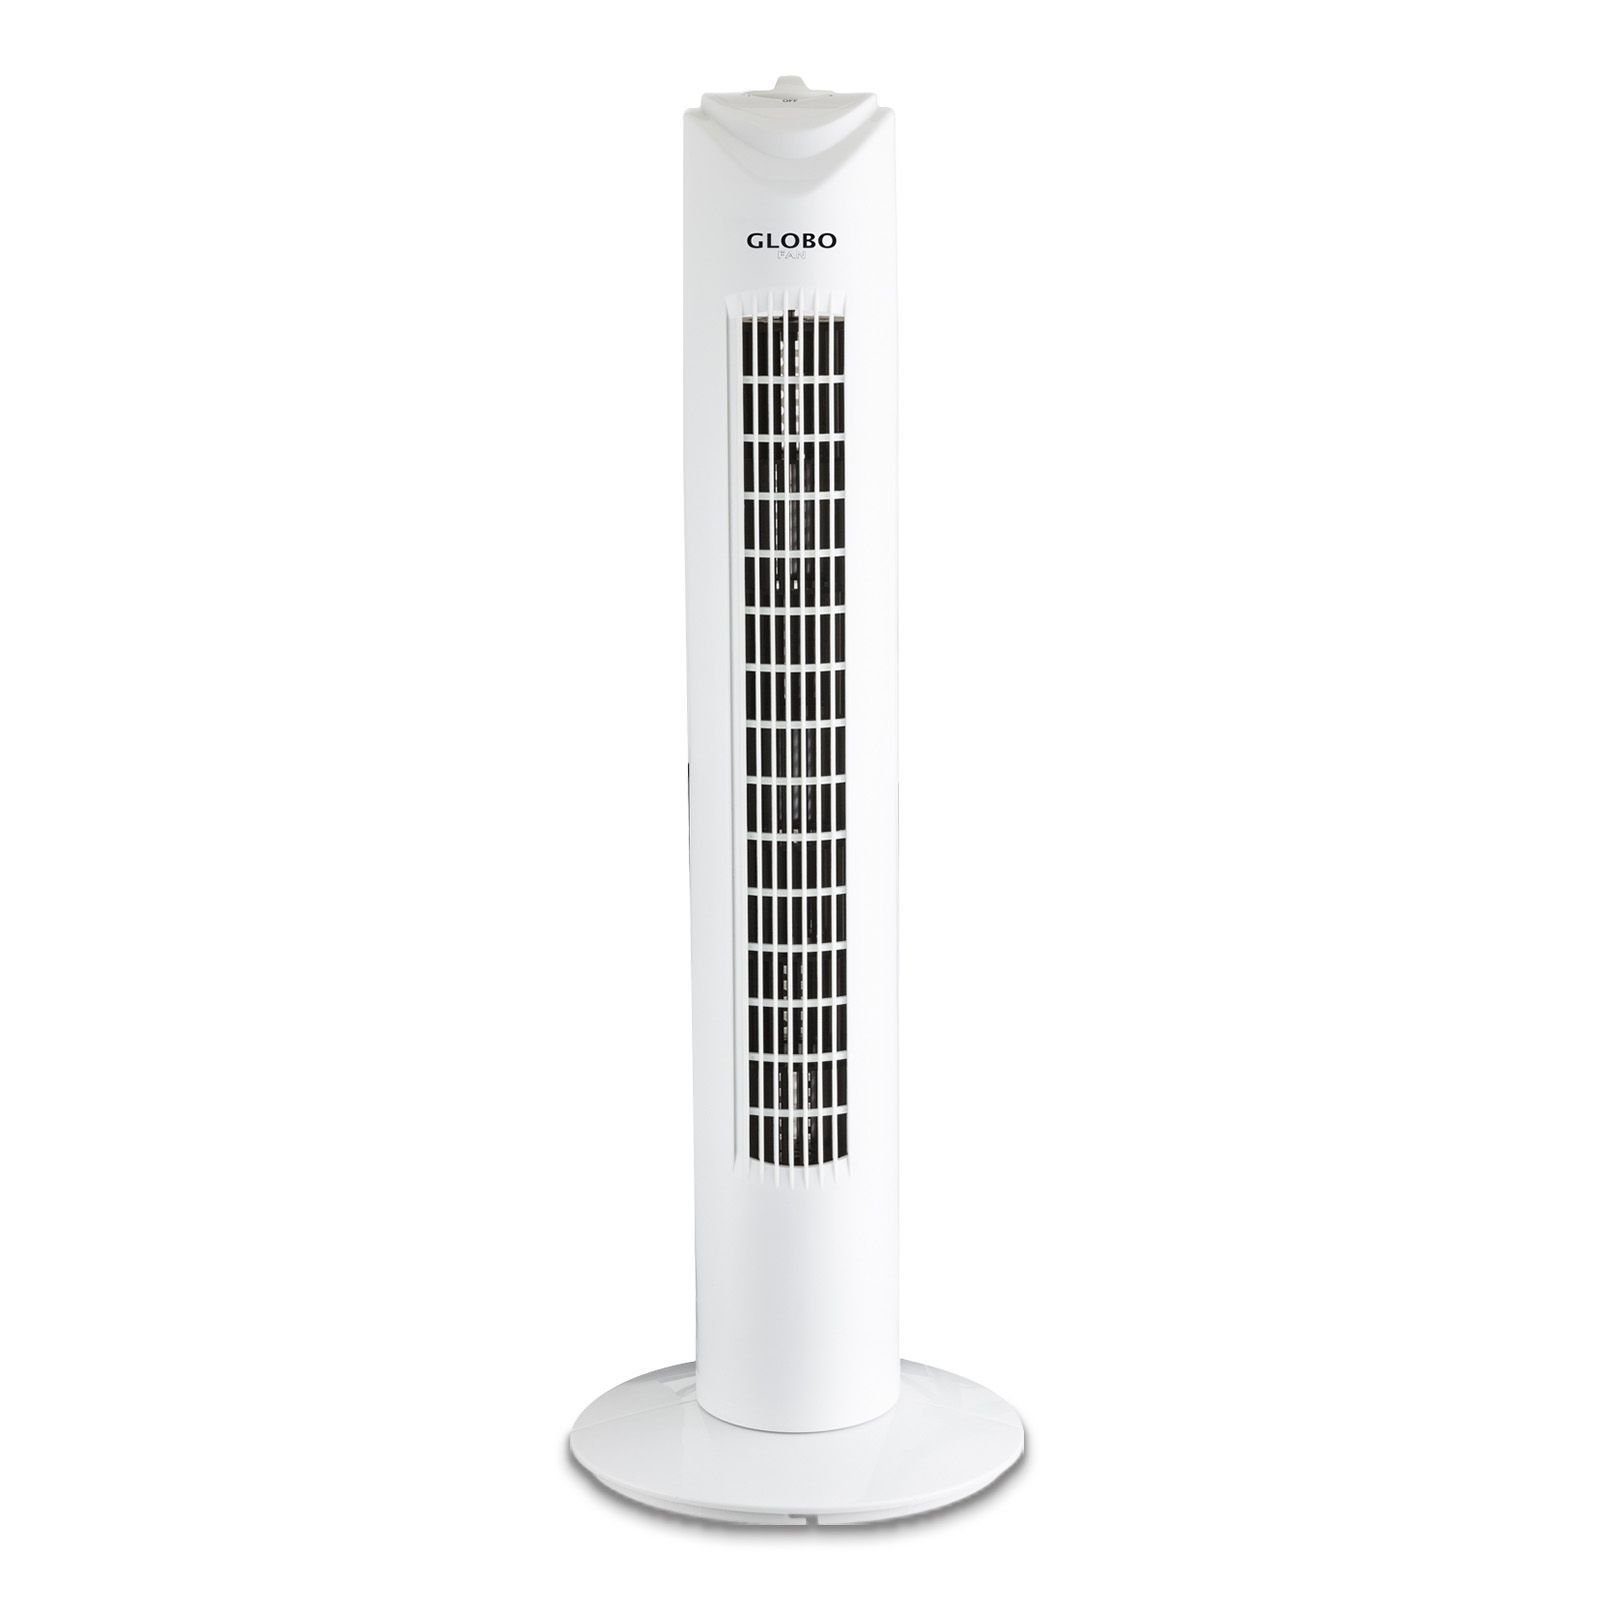 Standventilator Luftkühler Standlüfter Globo Windmaschine GLOBO Tower 0453 Standventilator